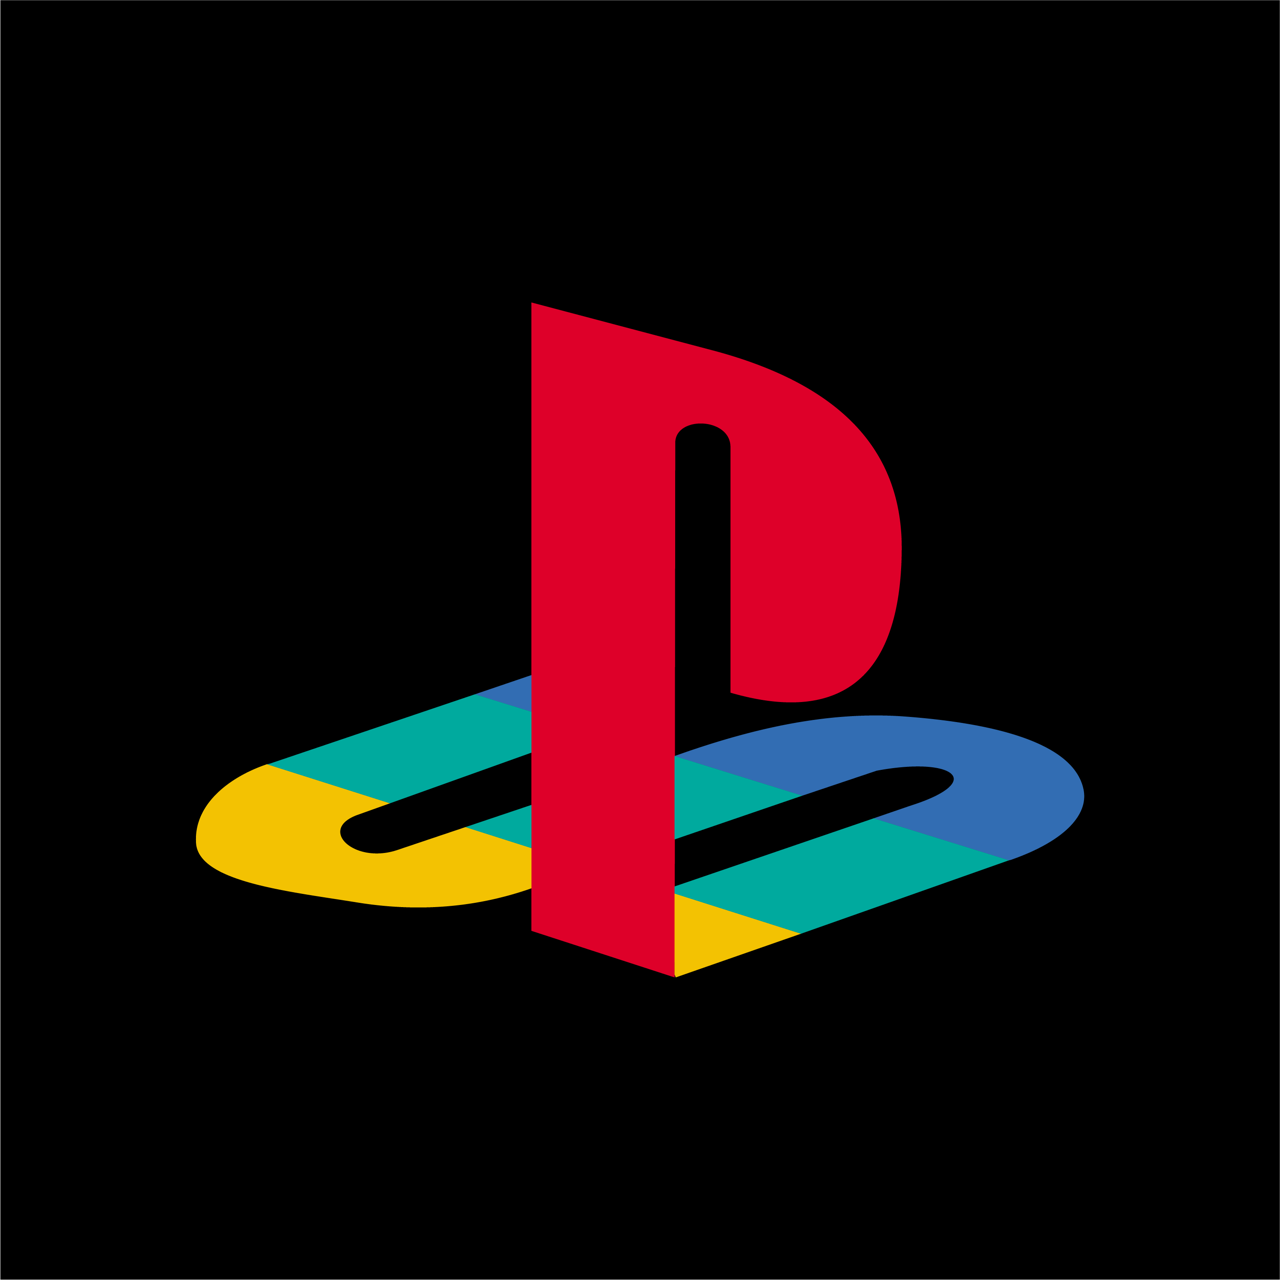 PLAYSTATION 1 logo